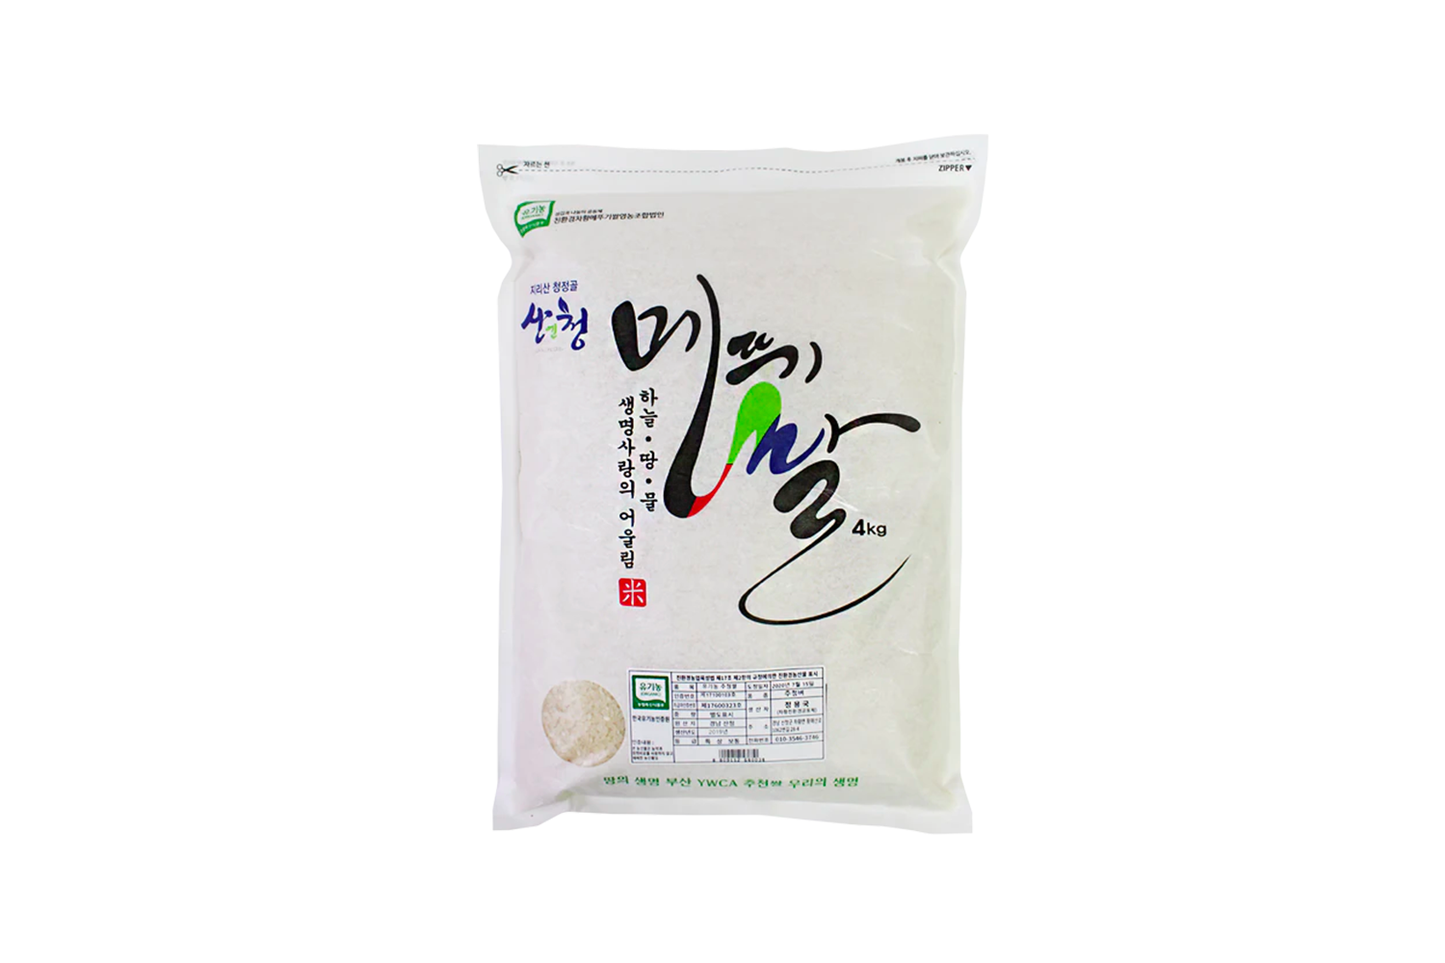 Sanencheong Organic Grasshopper Rice